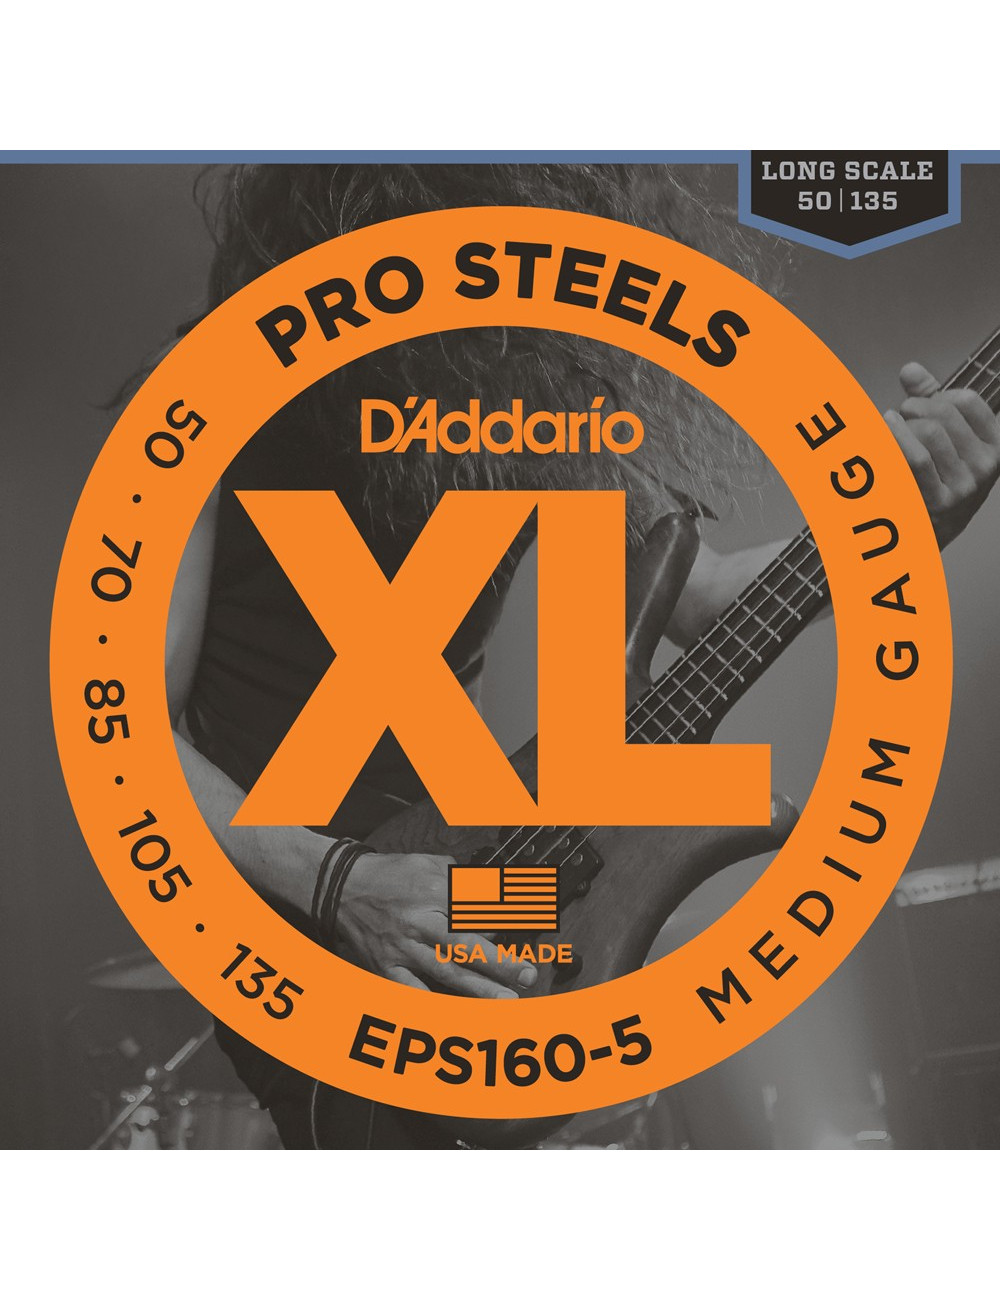 D\'Addario EPS160-5 ProSteels 5-String Bass, Medium, 50-135, Long Scale